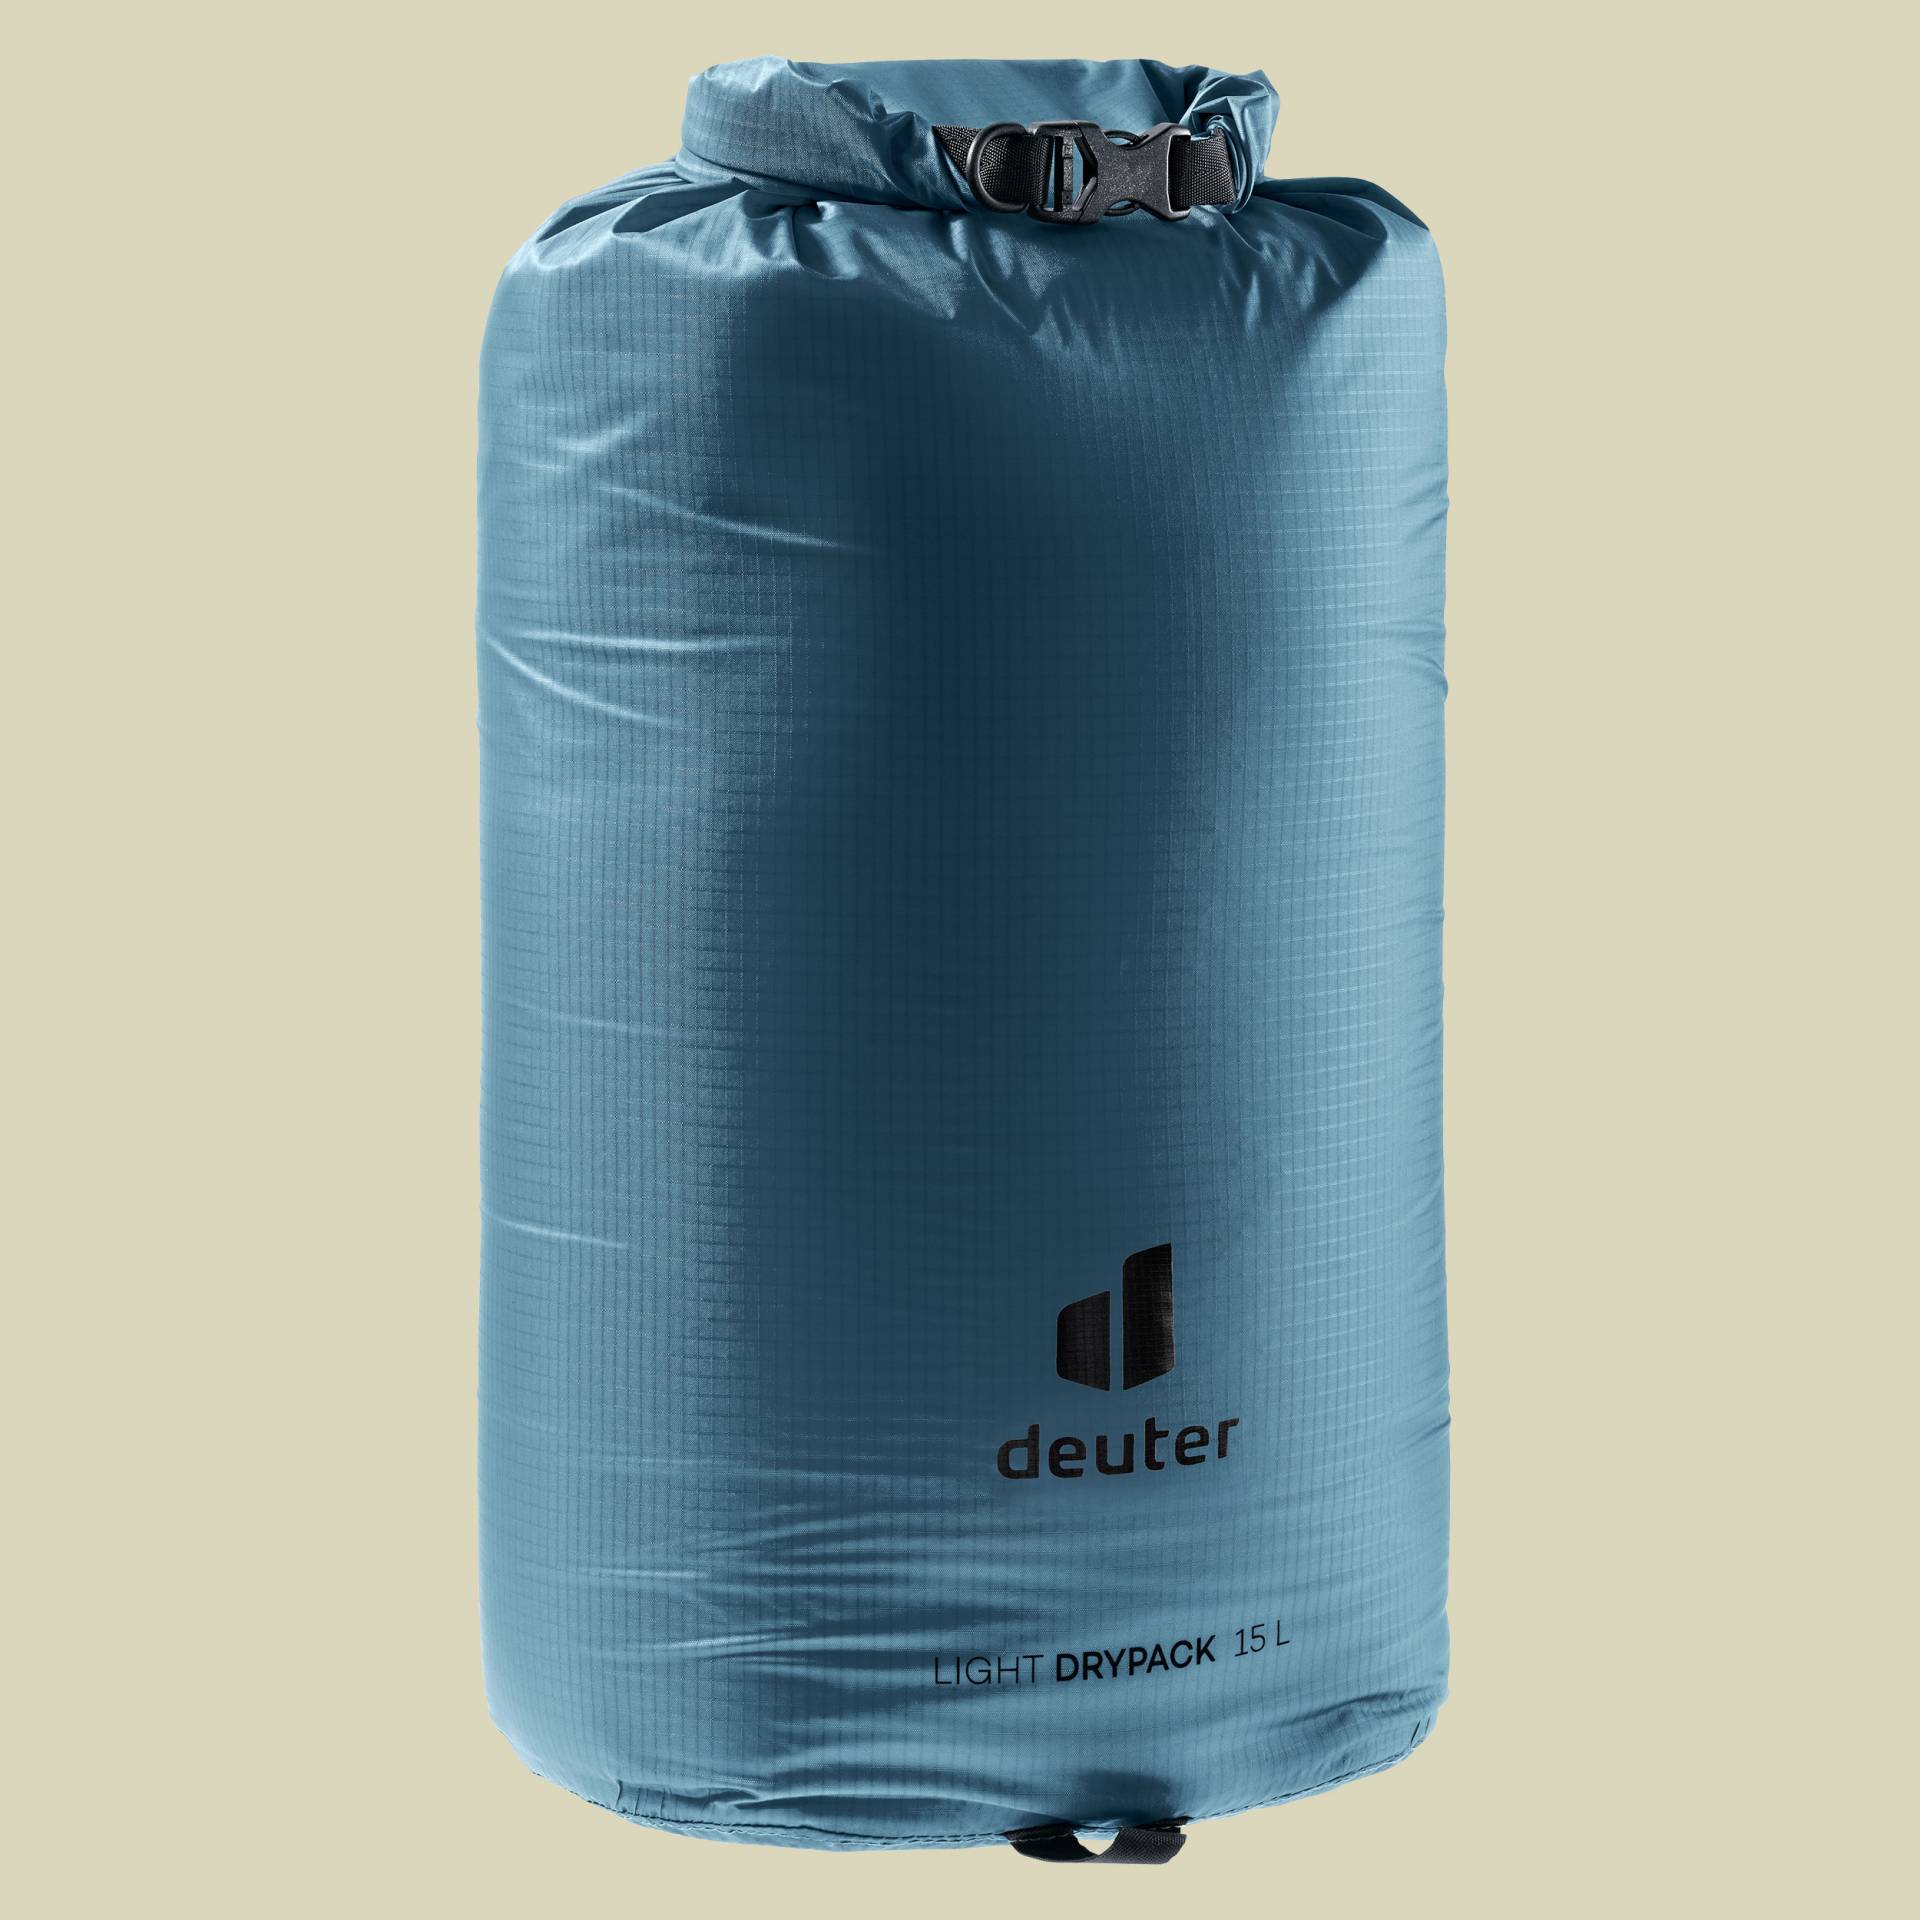 Light Drypack 15 Volumen 15 Liter Farbe atlantic von Deuter